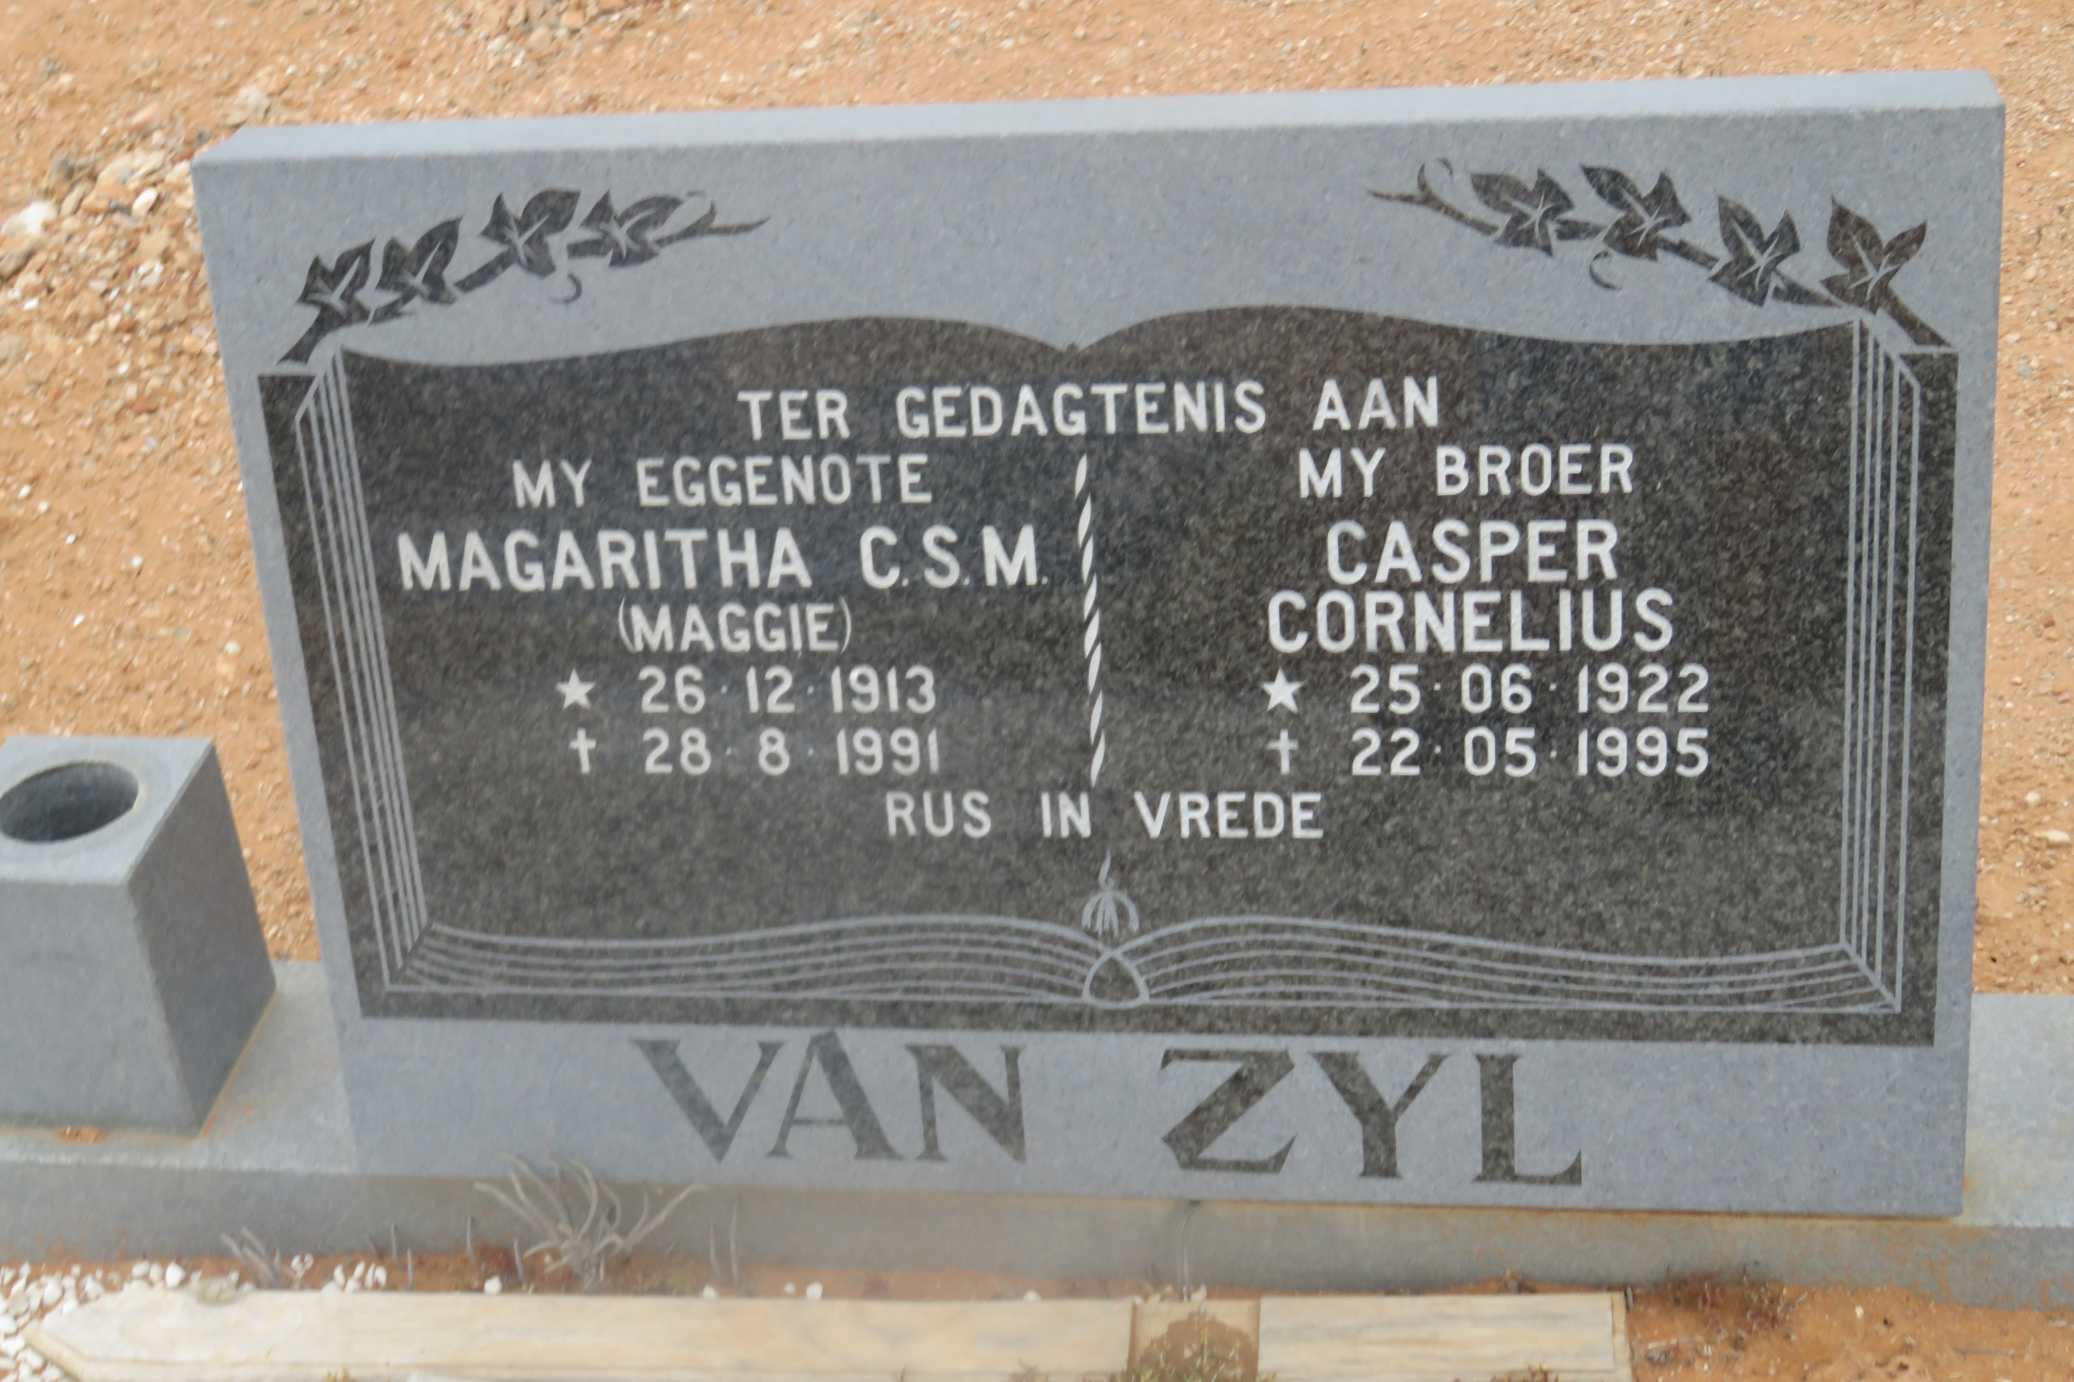 ZYL Casper Cornelius, van 1922-1995 & Magaritha C.S.M. 1913-1991